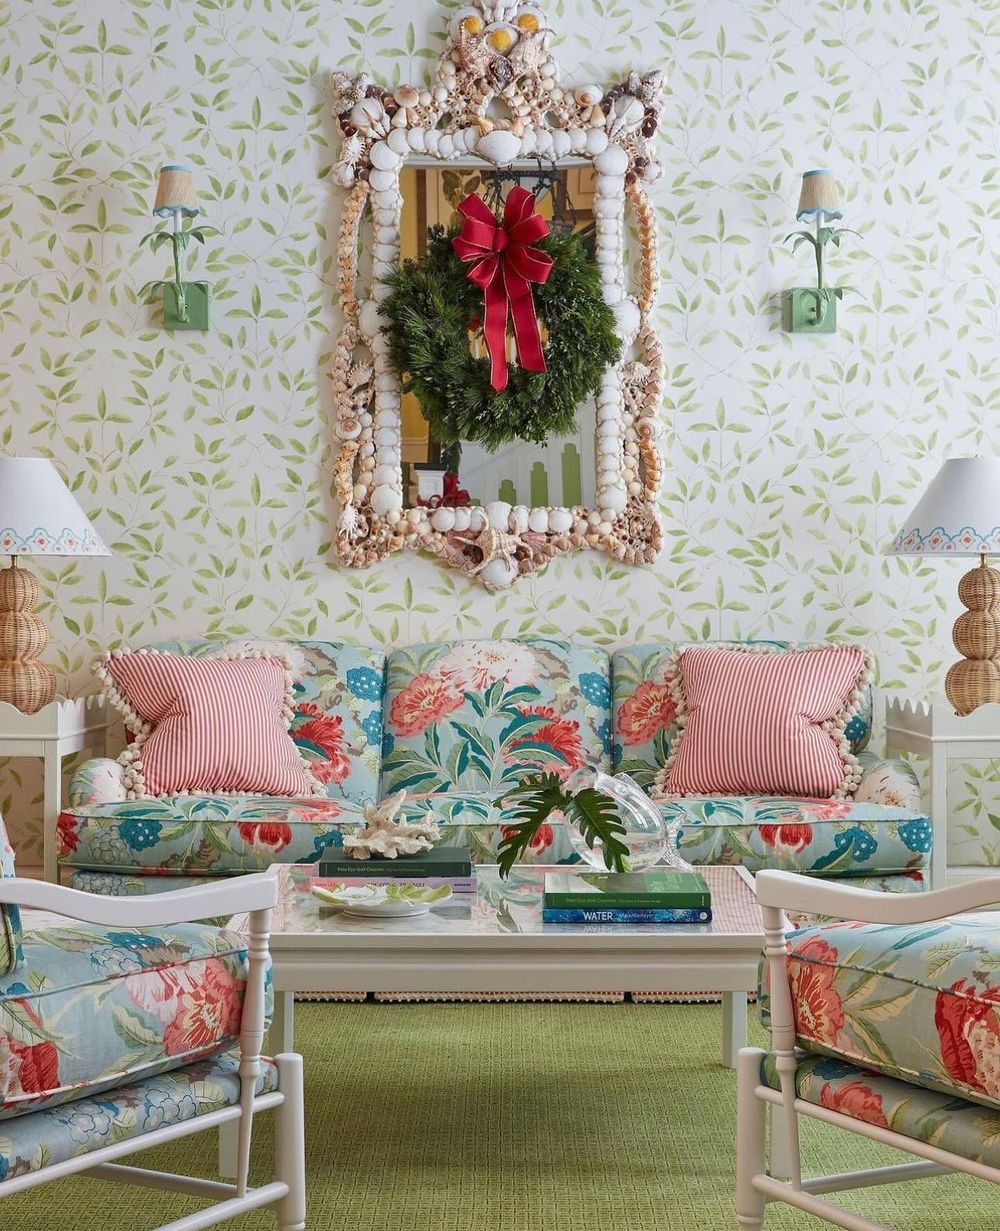 Palm beach living room seashell mirror decor @kemble_interiors